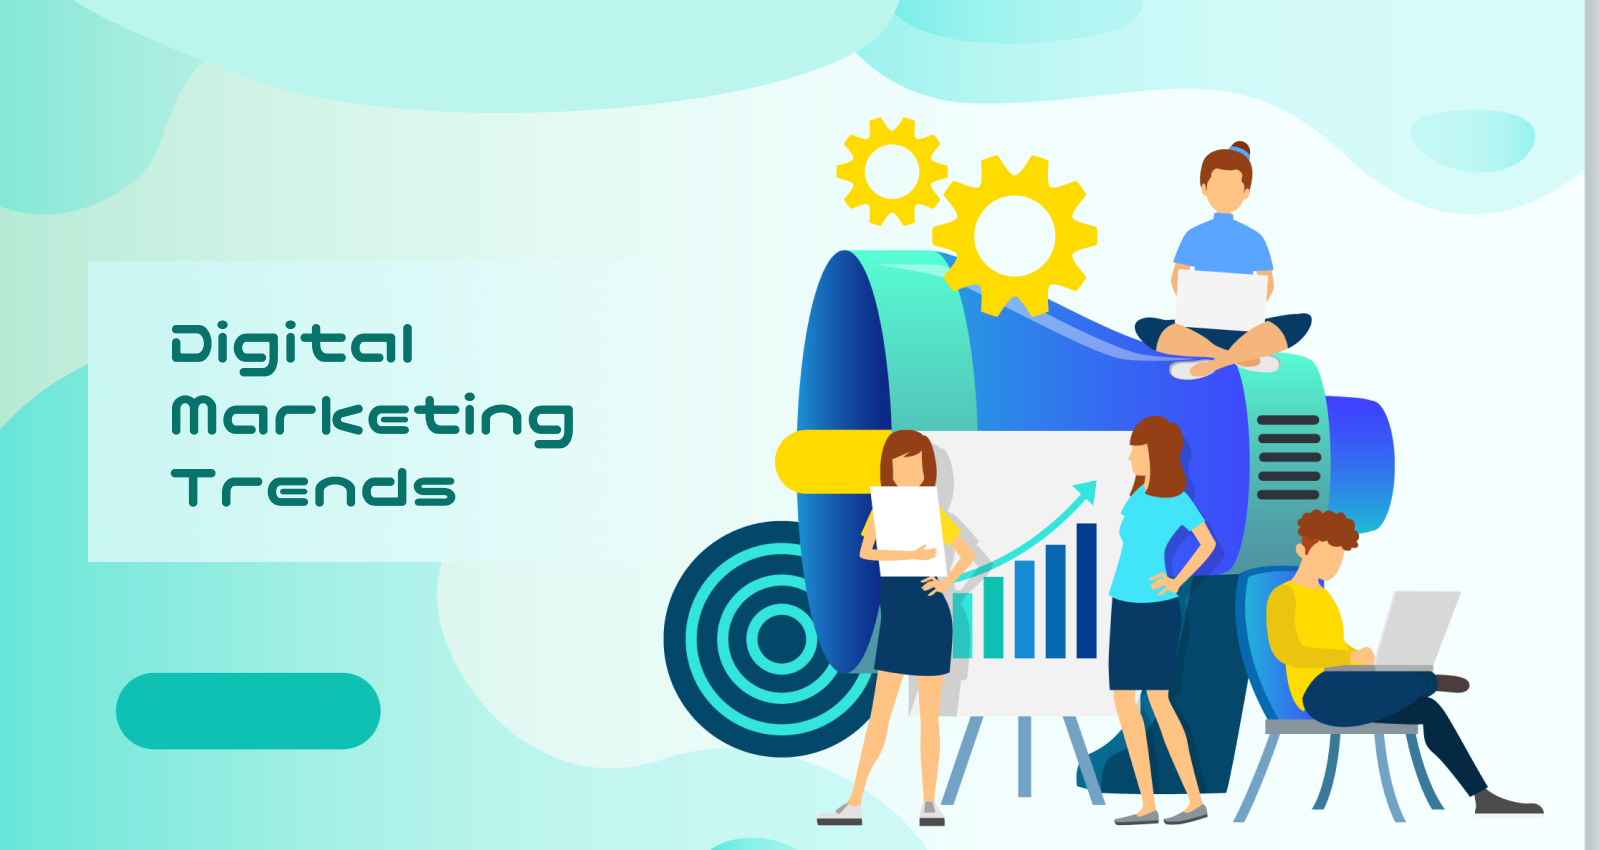 Digital Marketing Trends, Digital Marketing, Marketing Trends, Social Media, Hyper-Personalization, Interactive Marketing, Immersive Marketing, User Generated Content Marketing, AI in Marketing